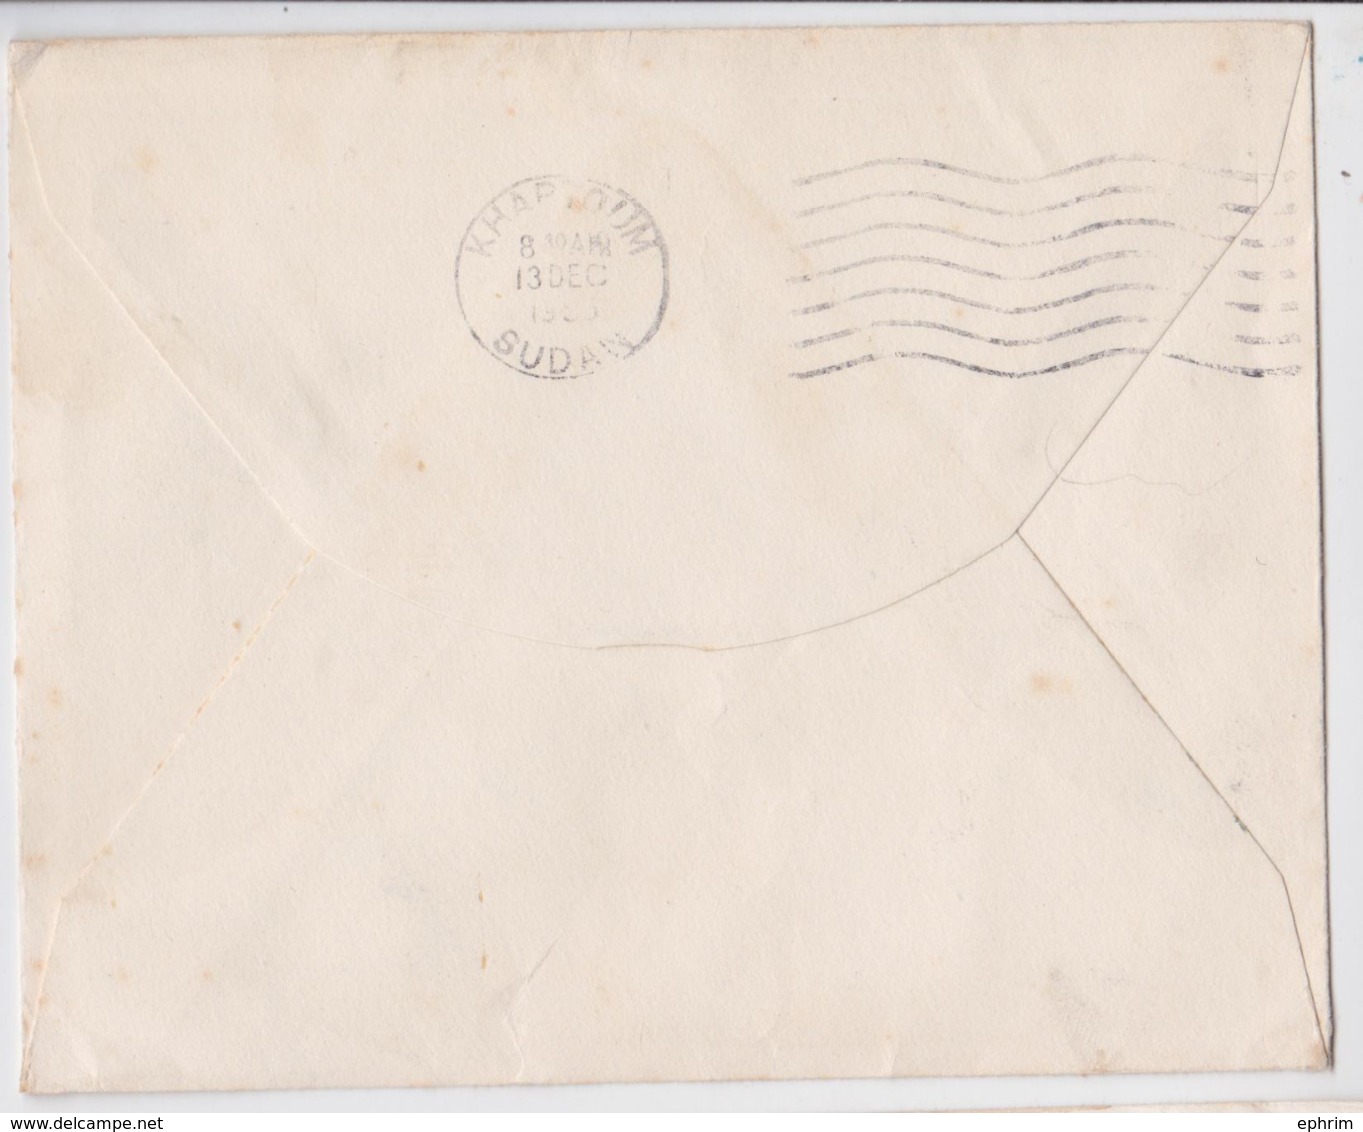 Sudan Stamp Khartoum Air Mail Cover To Middleton Lettre Timbre Soudan - Soudan (1954-...)